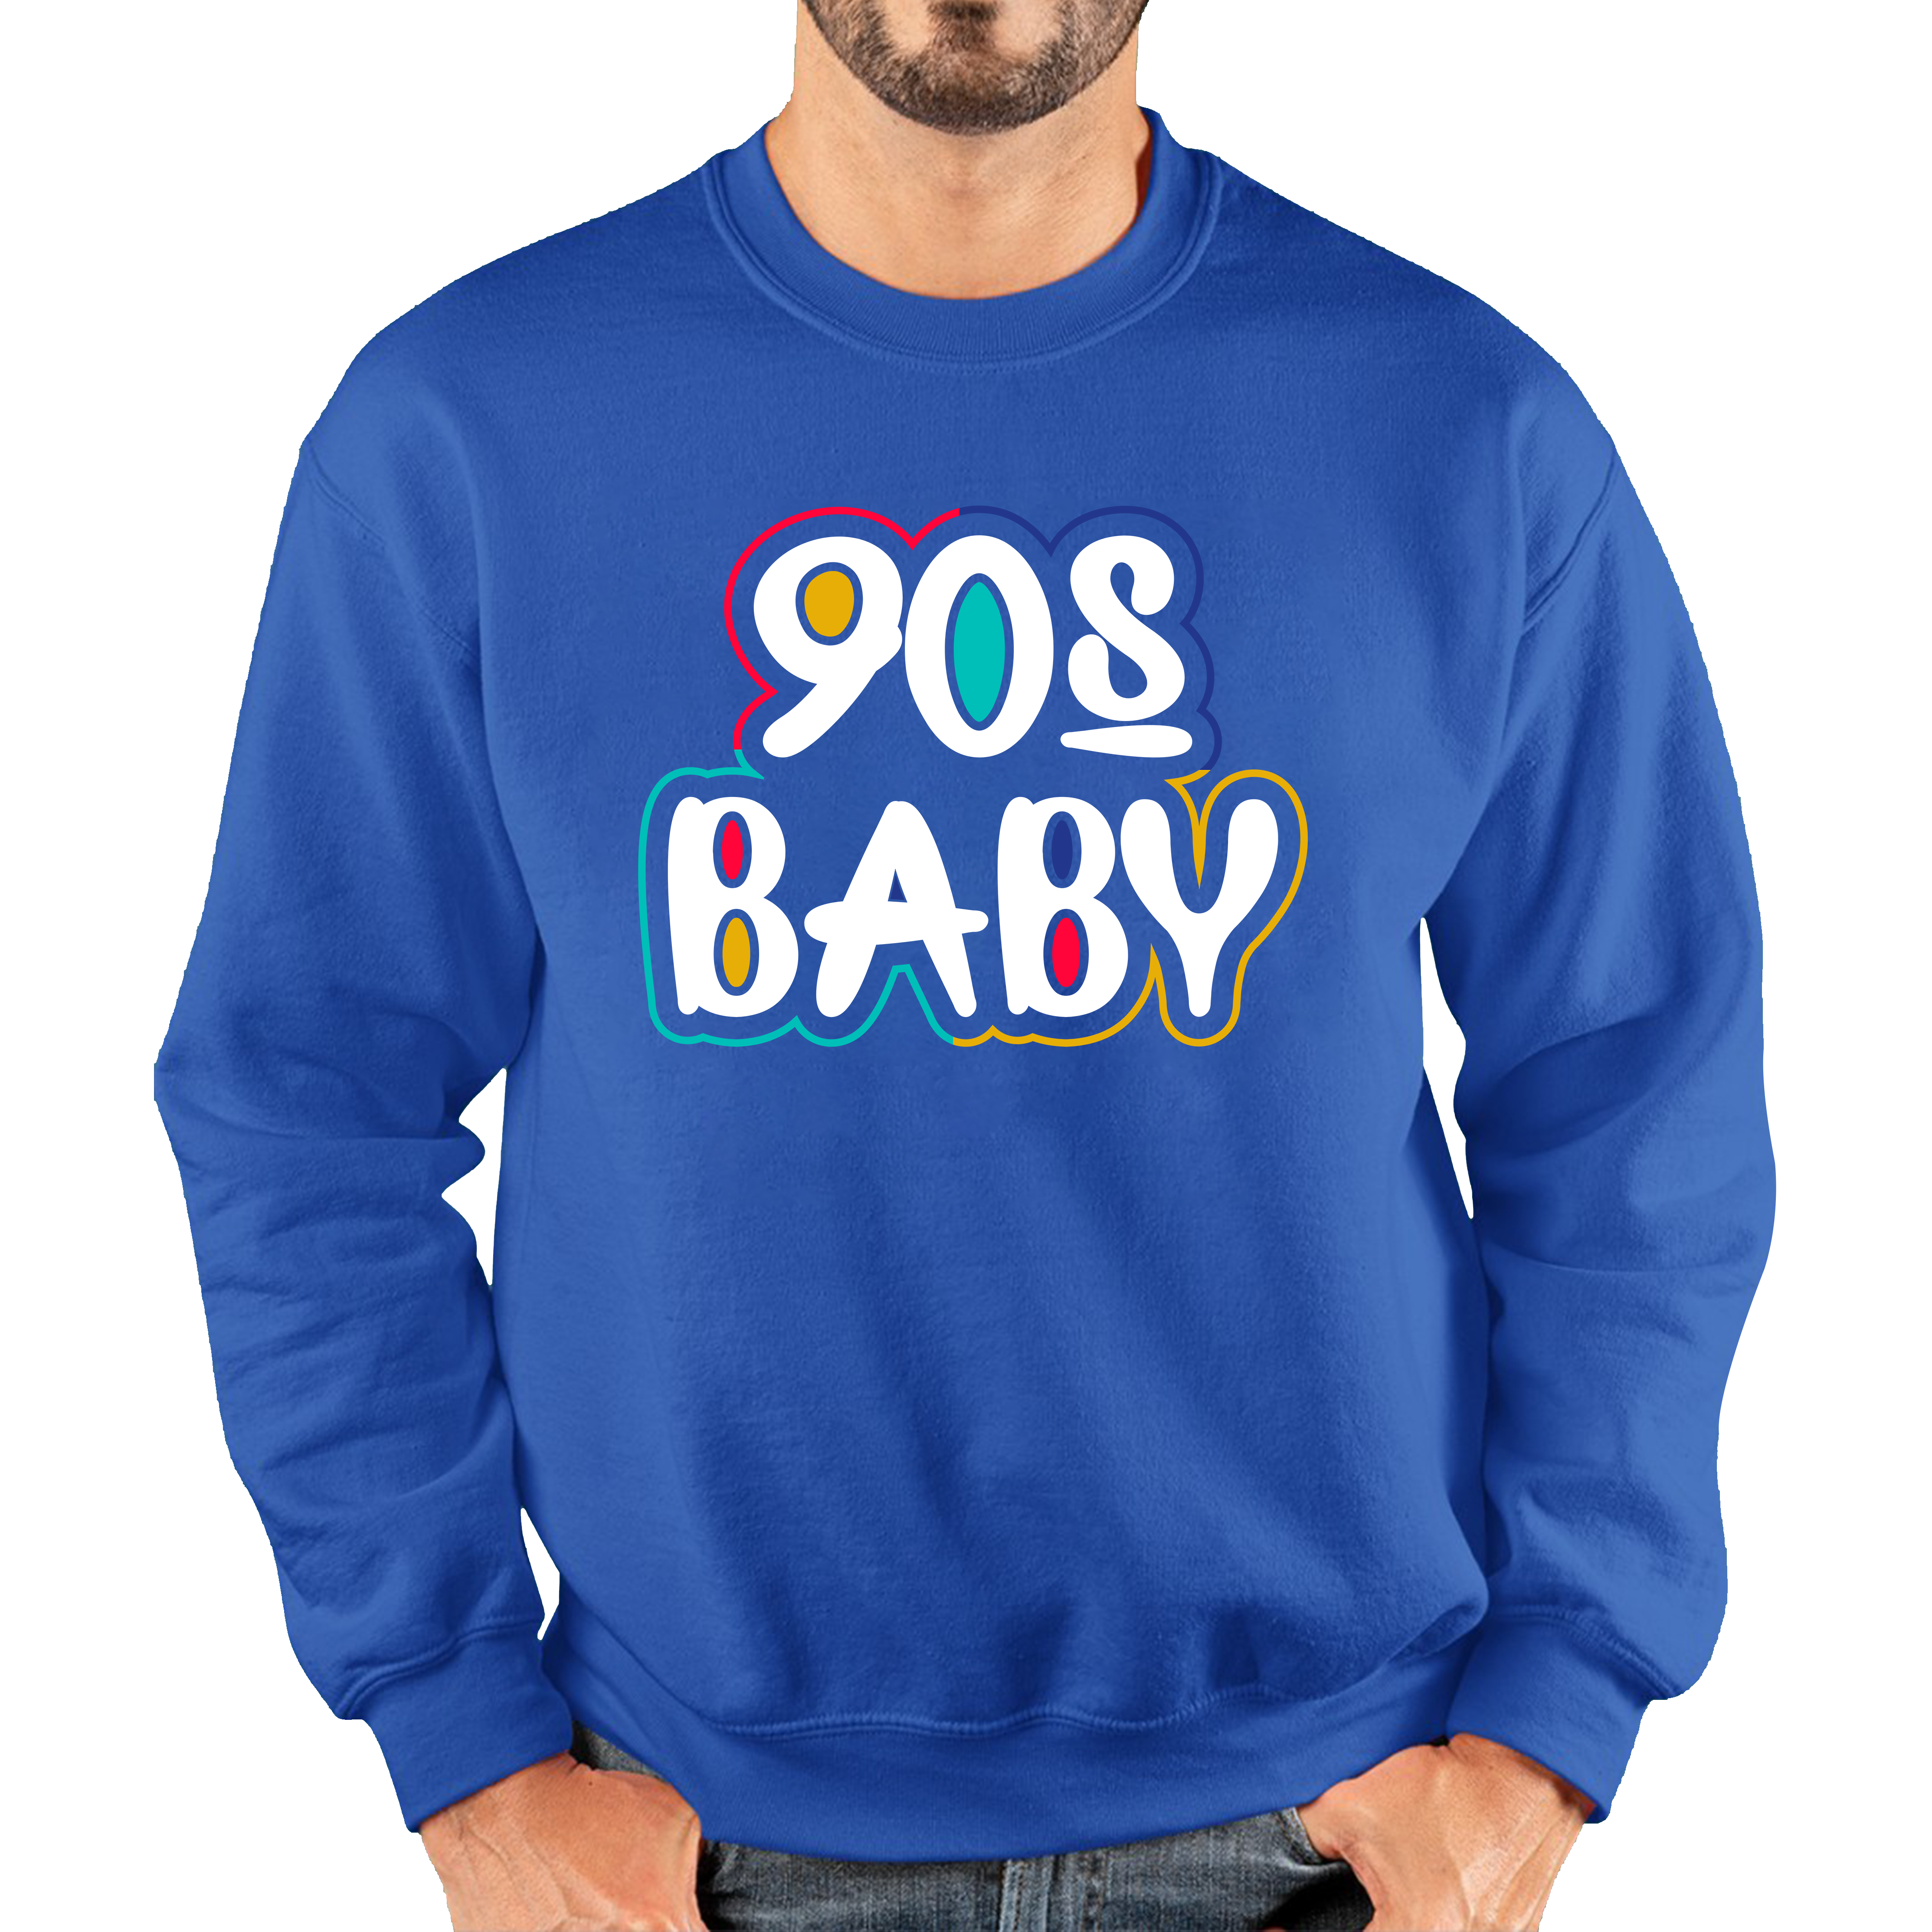 90s Baby Jumper Awesome cool 90's baby fashion Vintag Funny Joke Novelty Design Unisex Sweatshirt